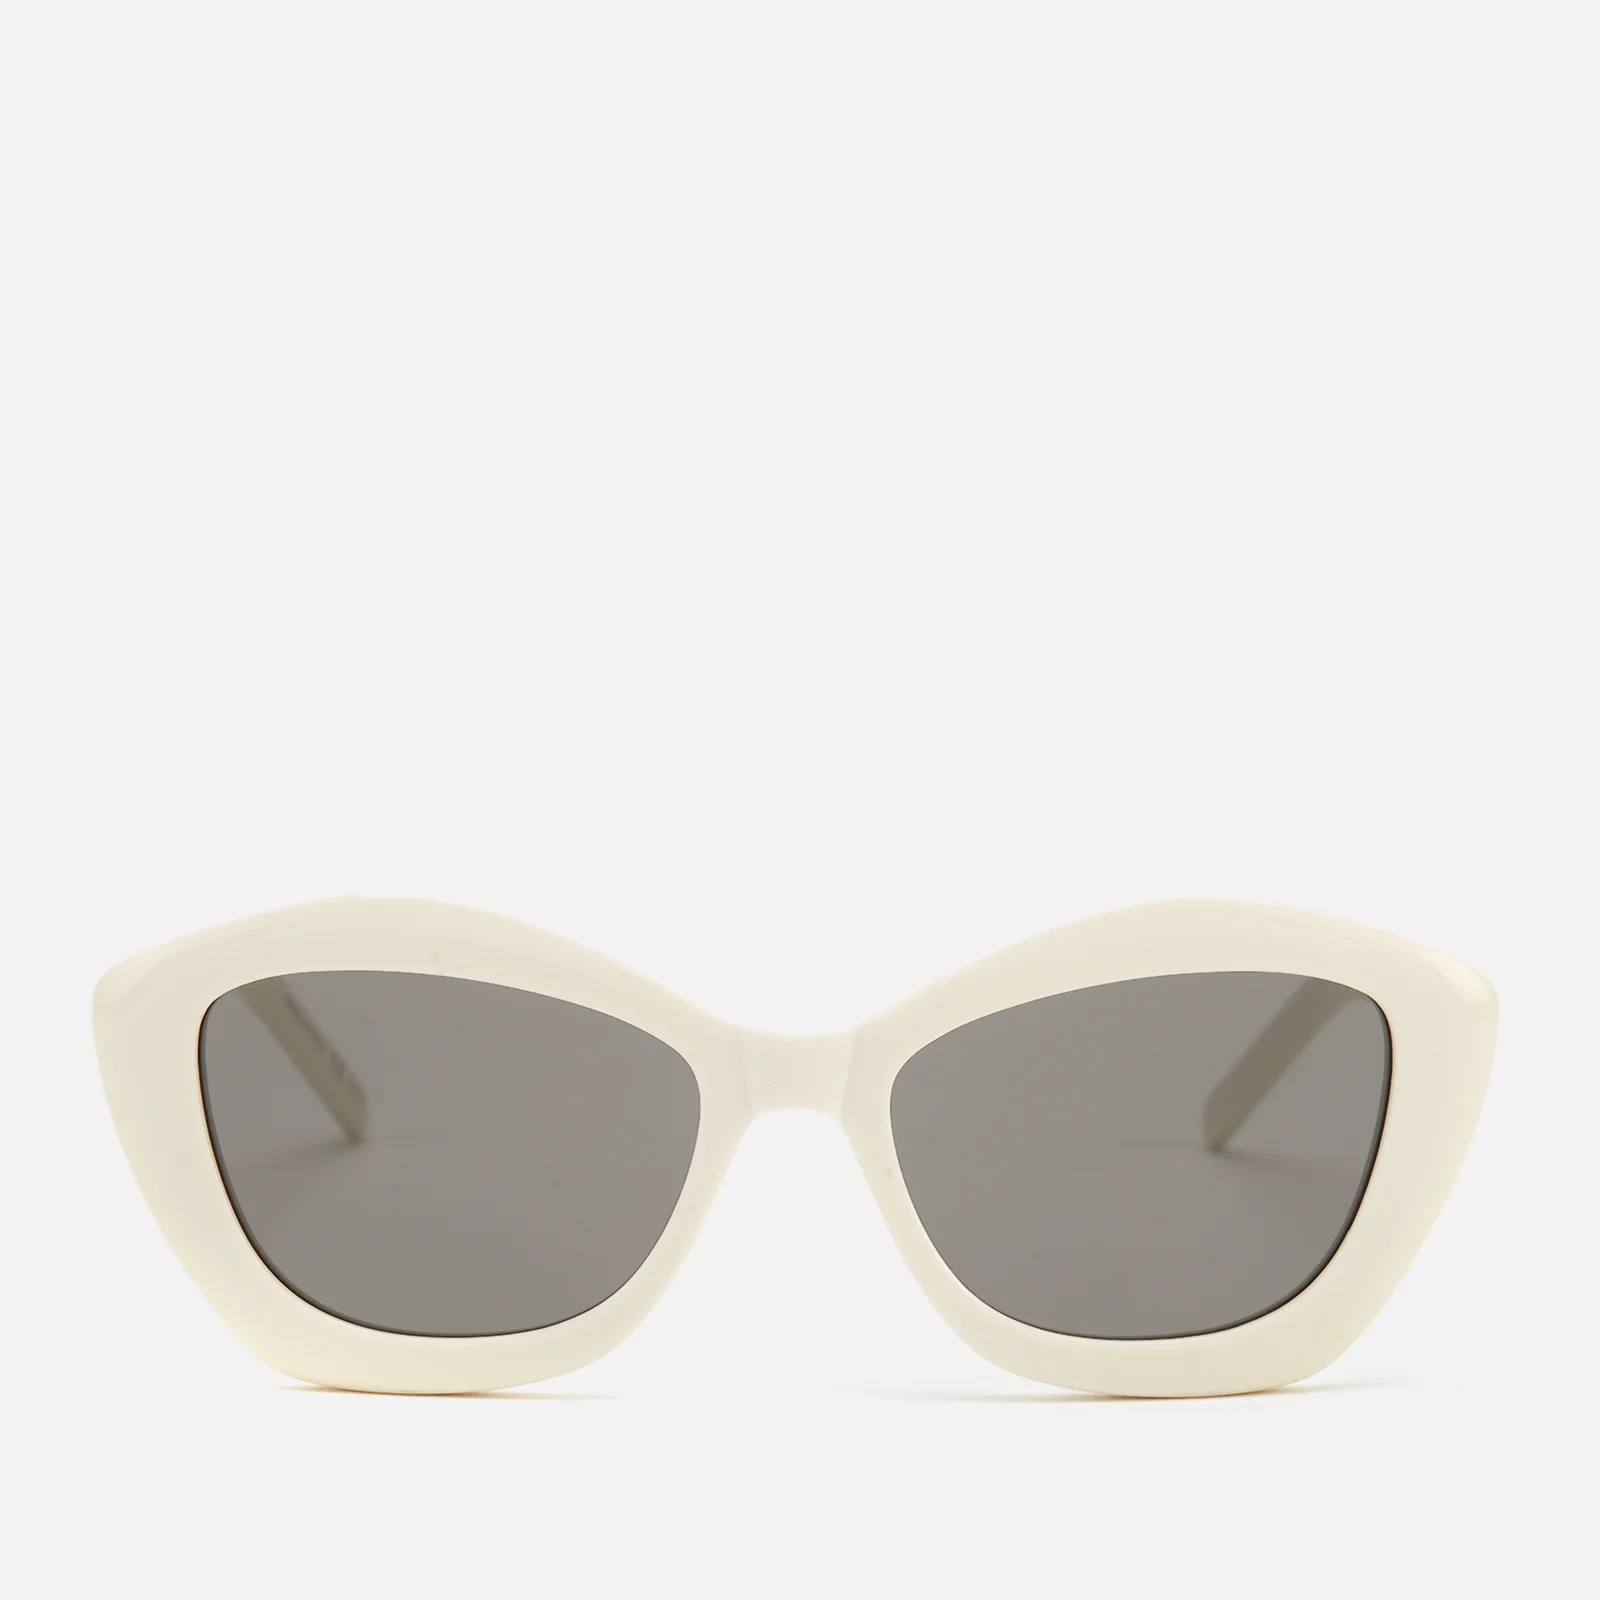 Saint Laurent Women's Oversized Acetate Sunglasses - Ivory/Grey Image 1